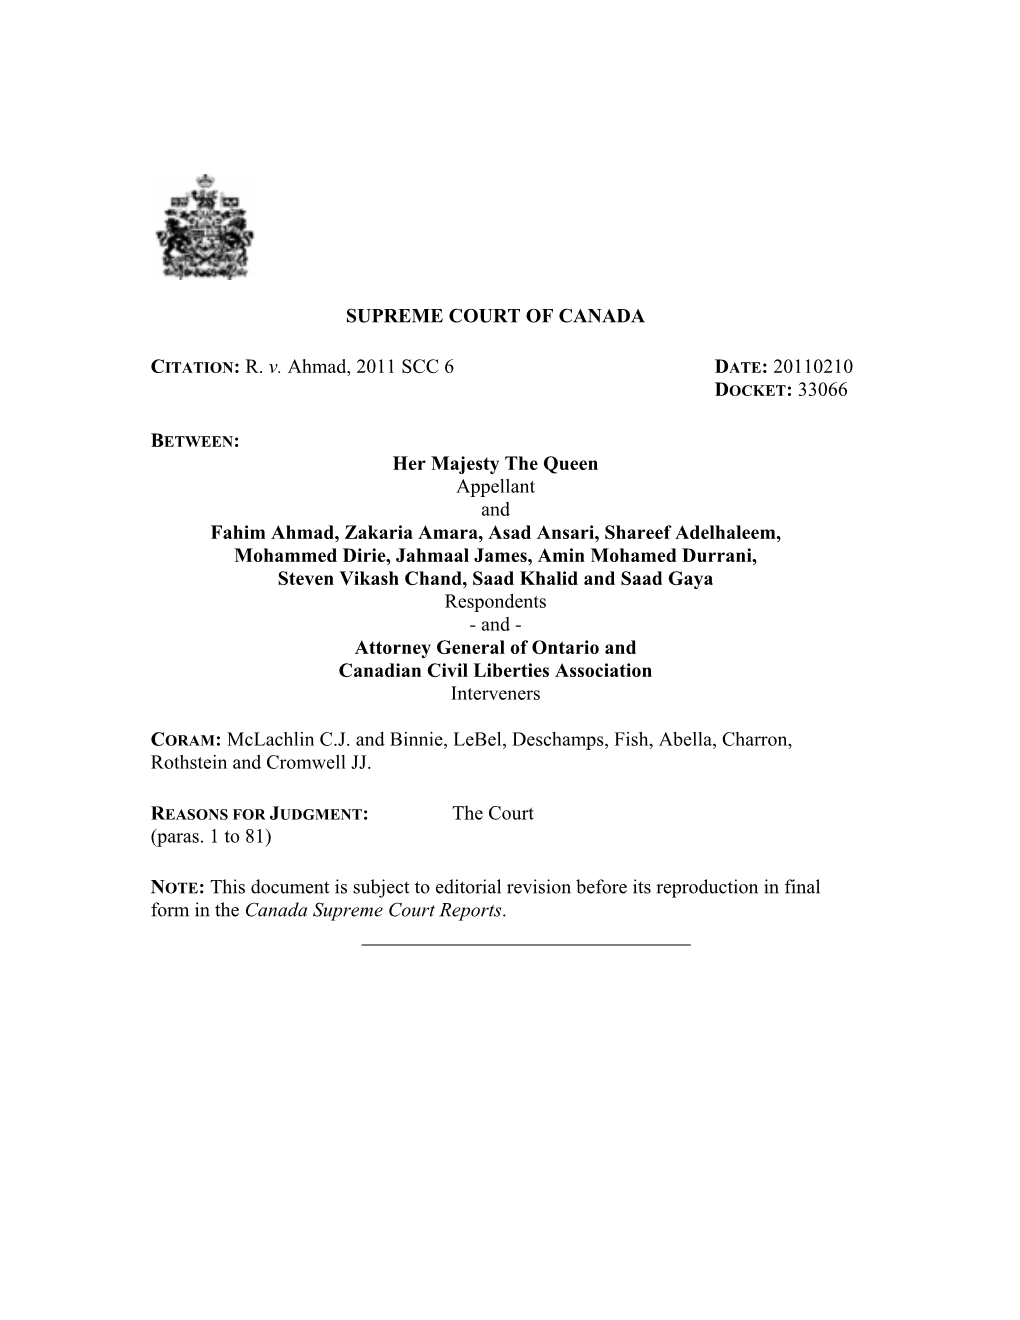 SUPREME COURT of CANADA CITATION: R. V. Ahmad, 2011 SCC 6 DATE